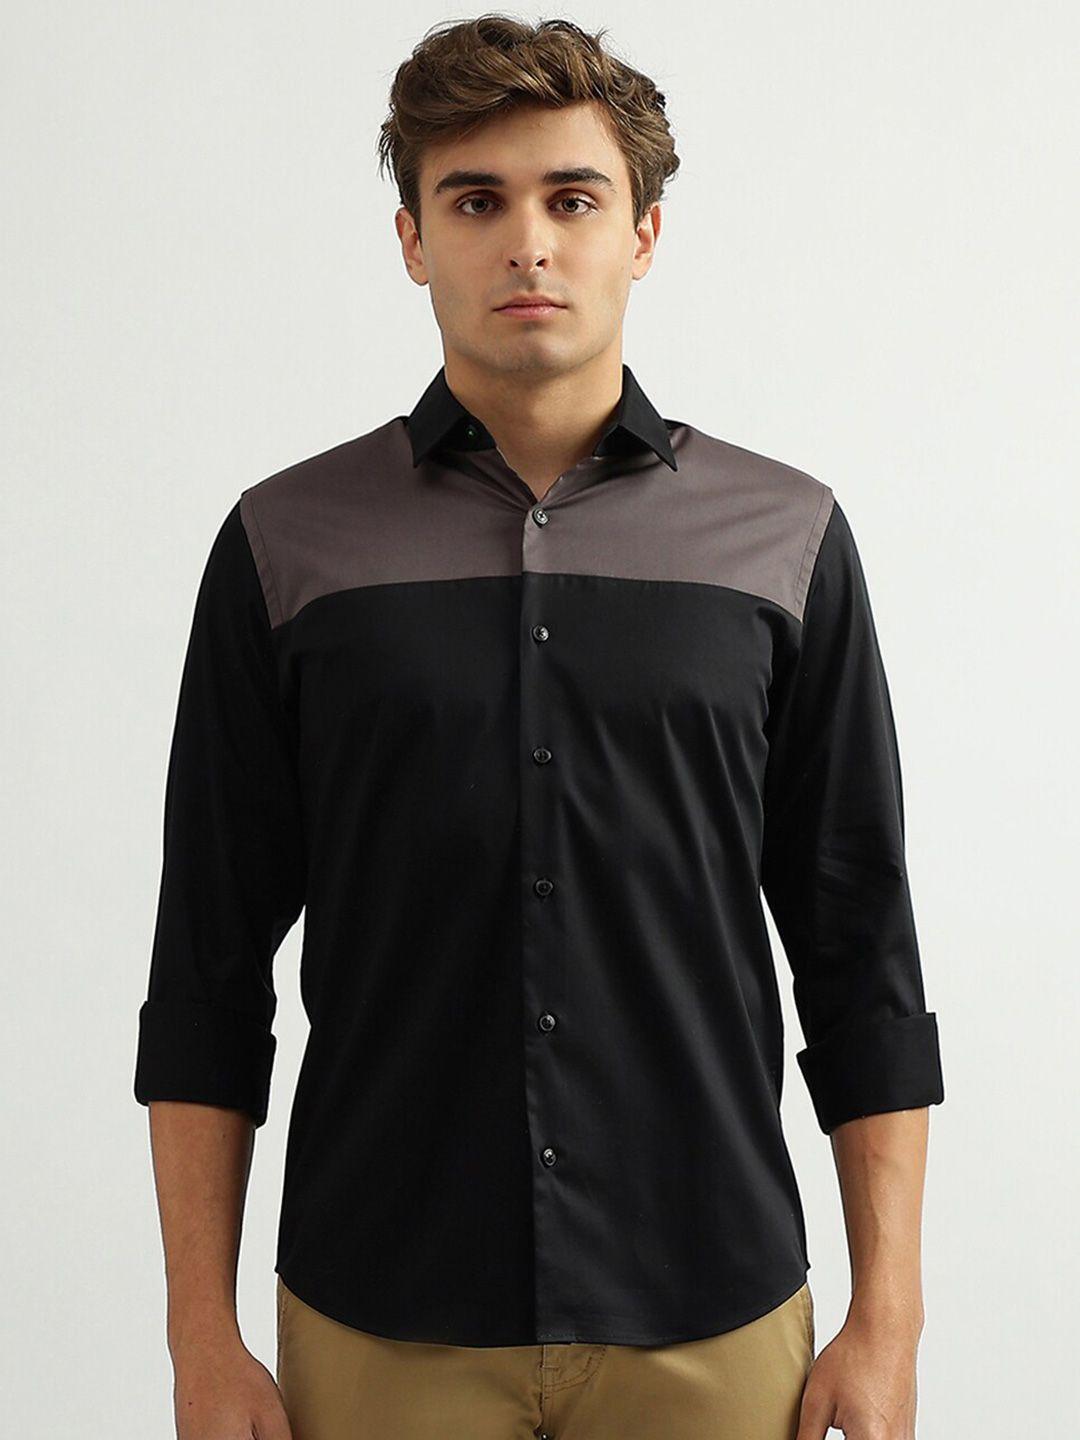 united-colors-of-benetton-men-slim-fit-colourblocked-casual-cotton-shirt